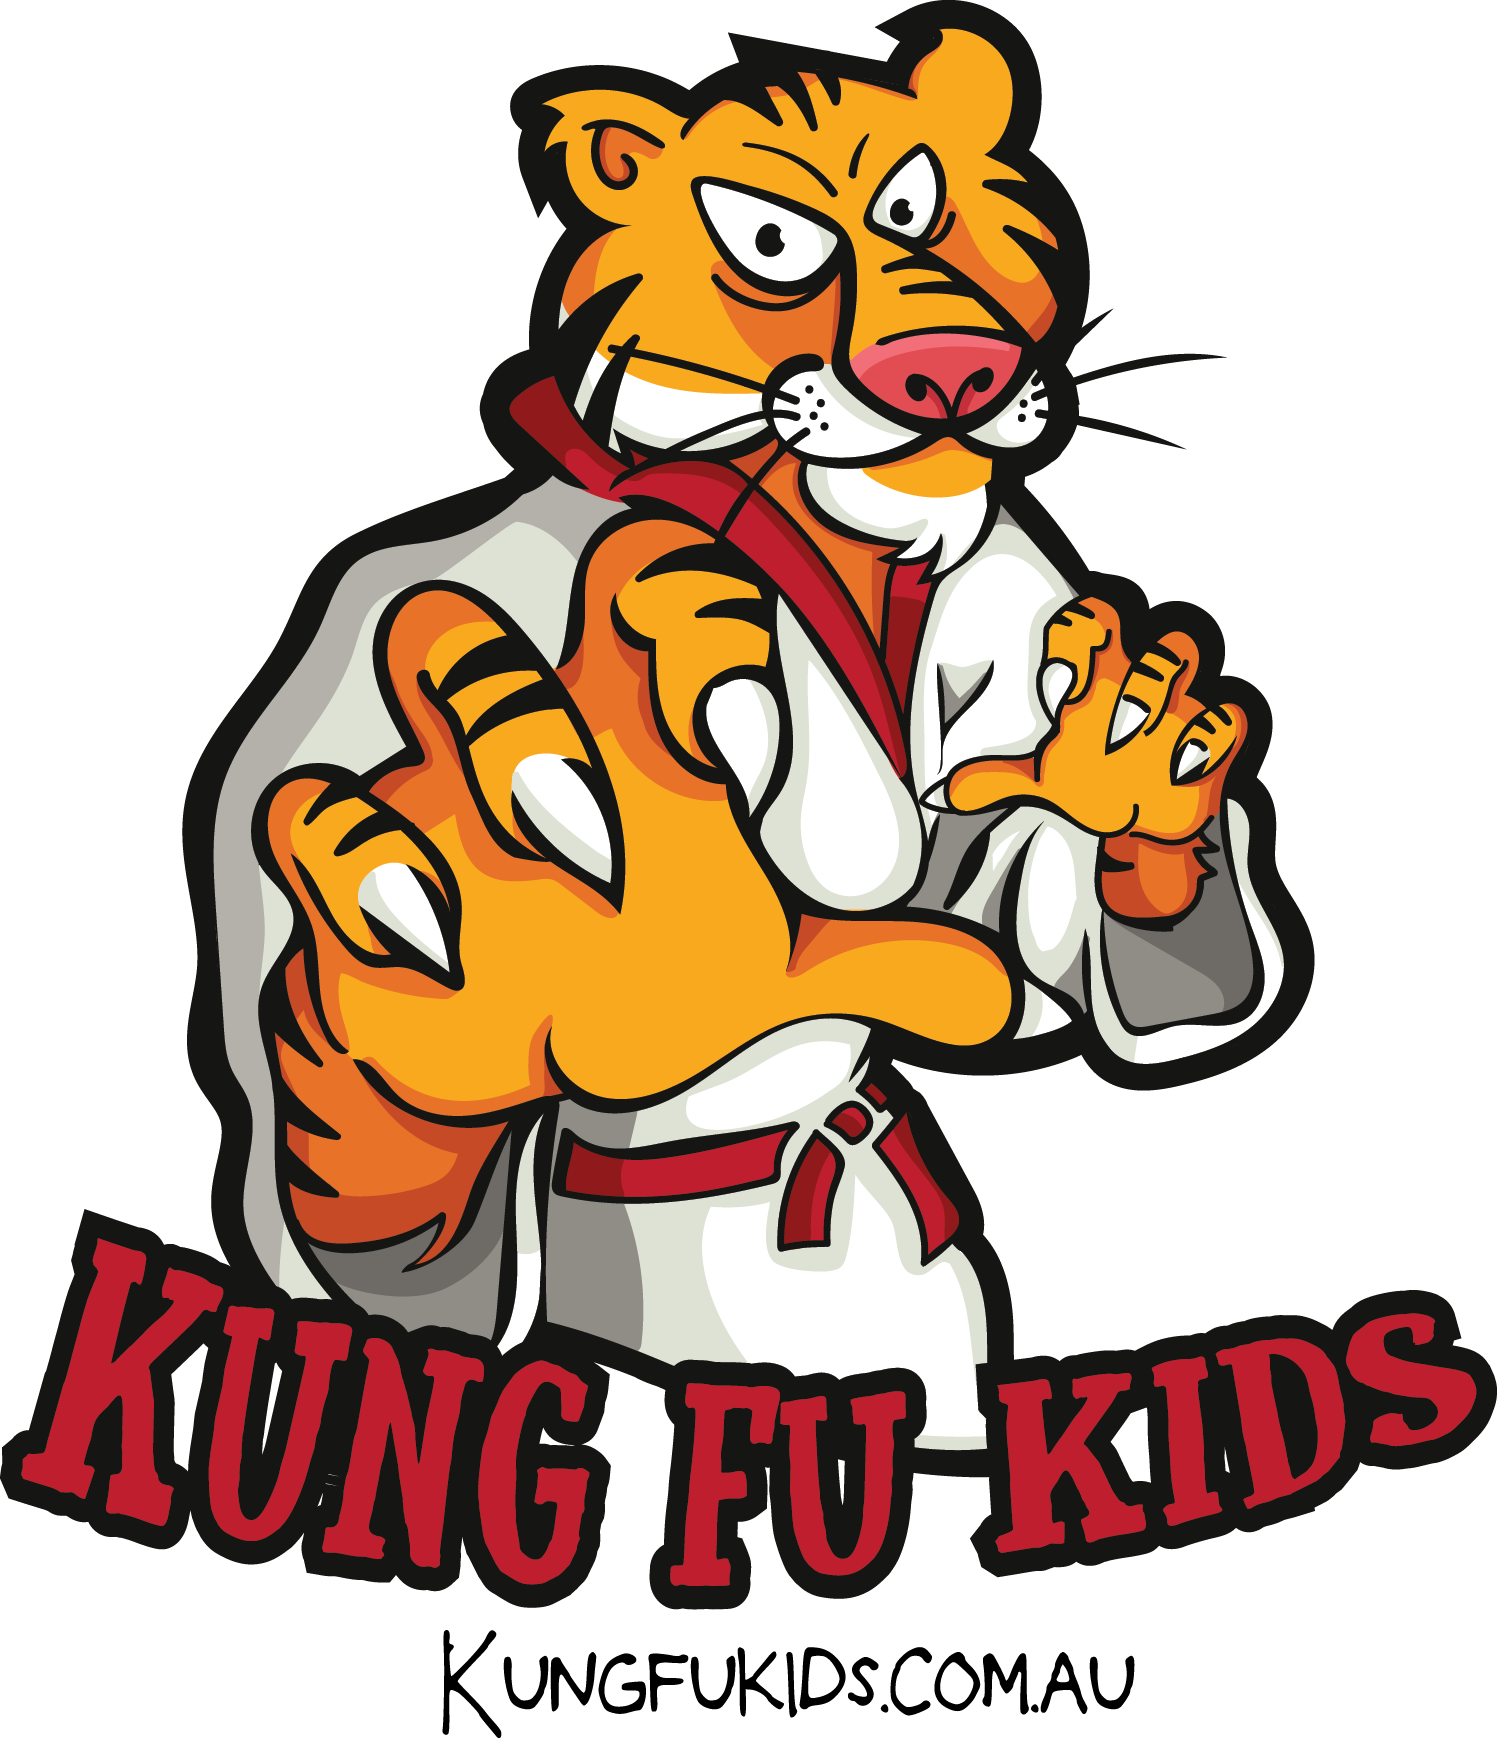 About Wing Chun Kung Fu - Kung Fu (1497x1738)